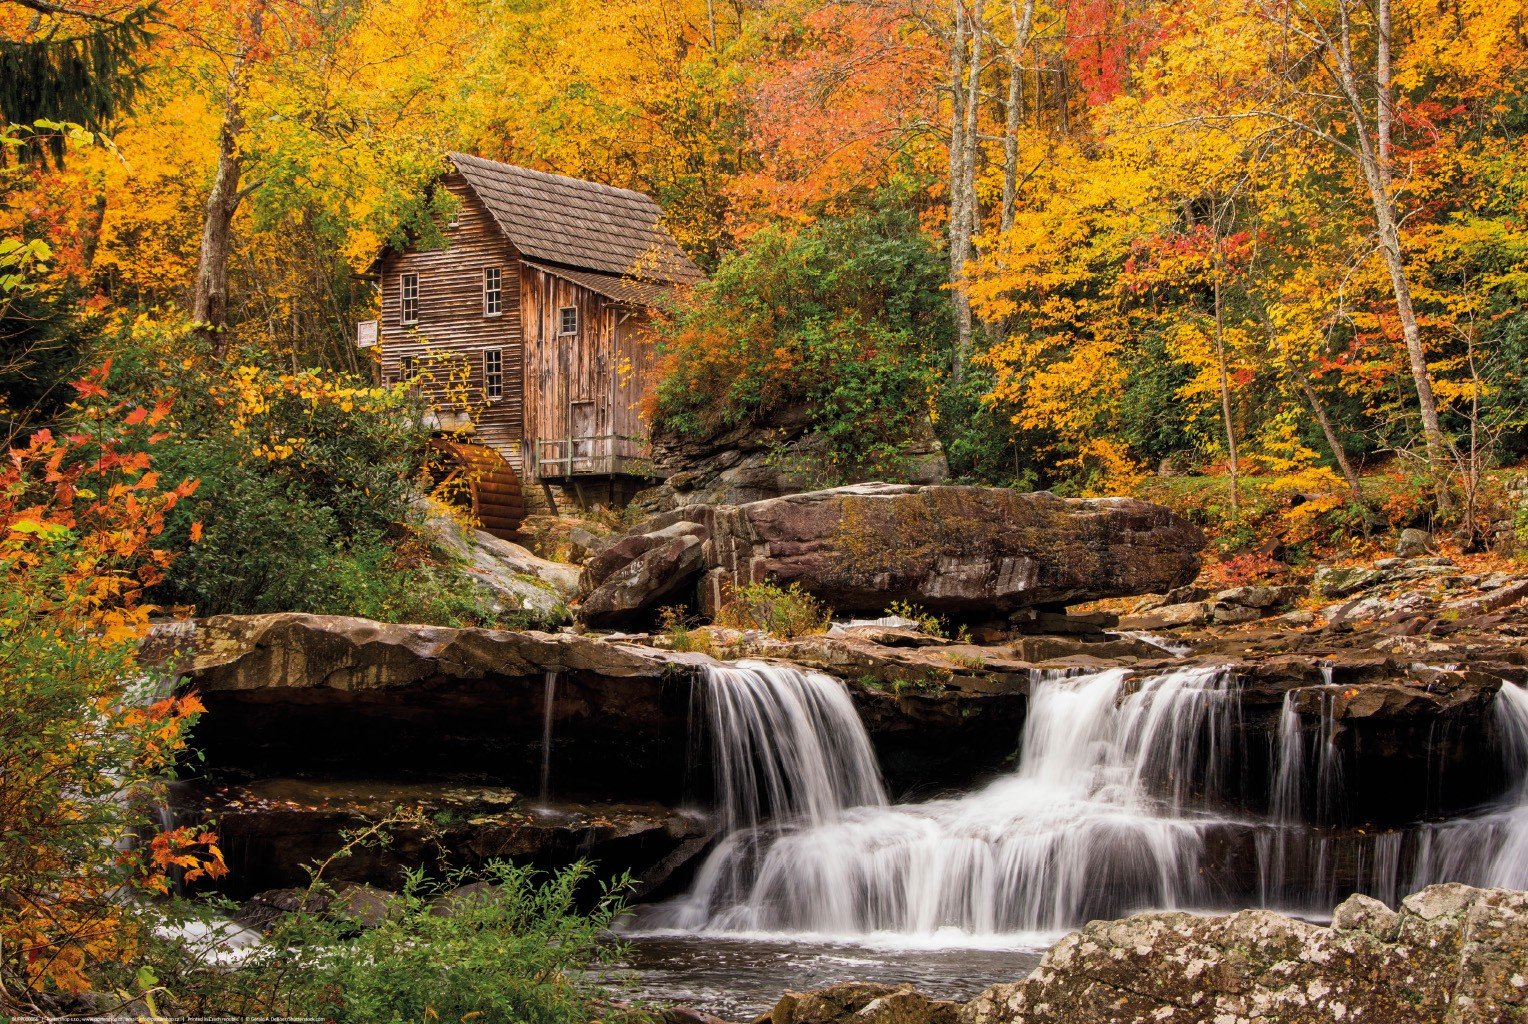 Plagát: Jesenný mlyn (Glade Creek Grist Mill)